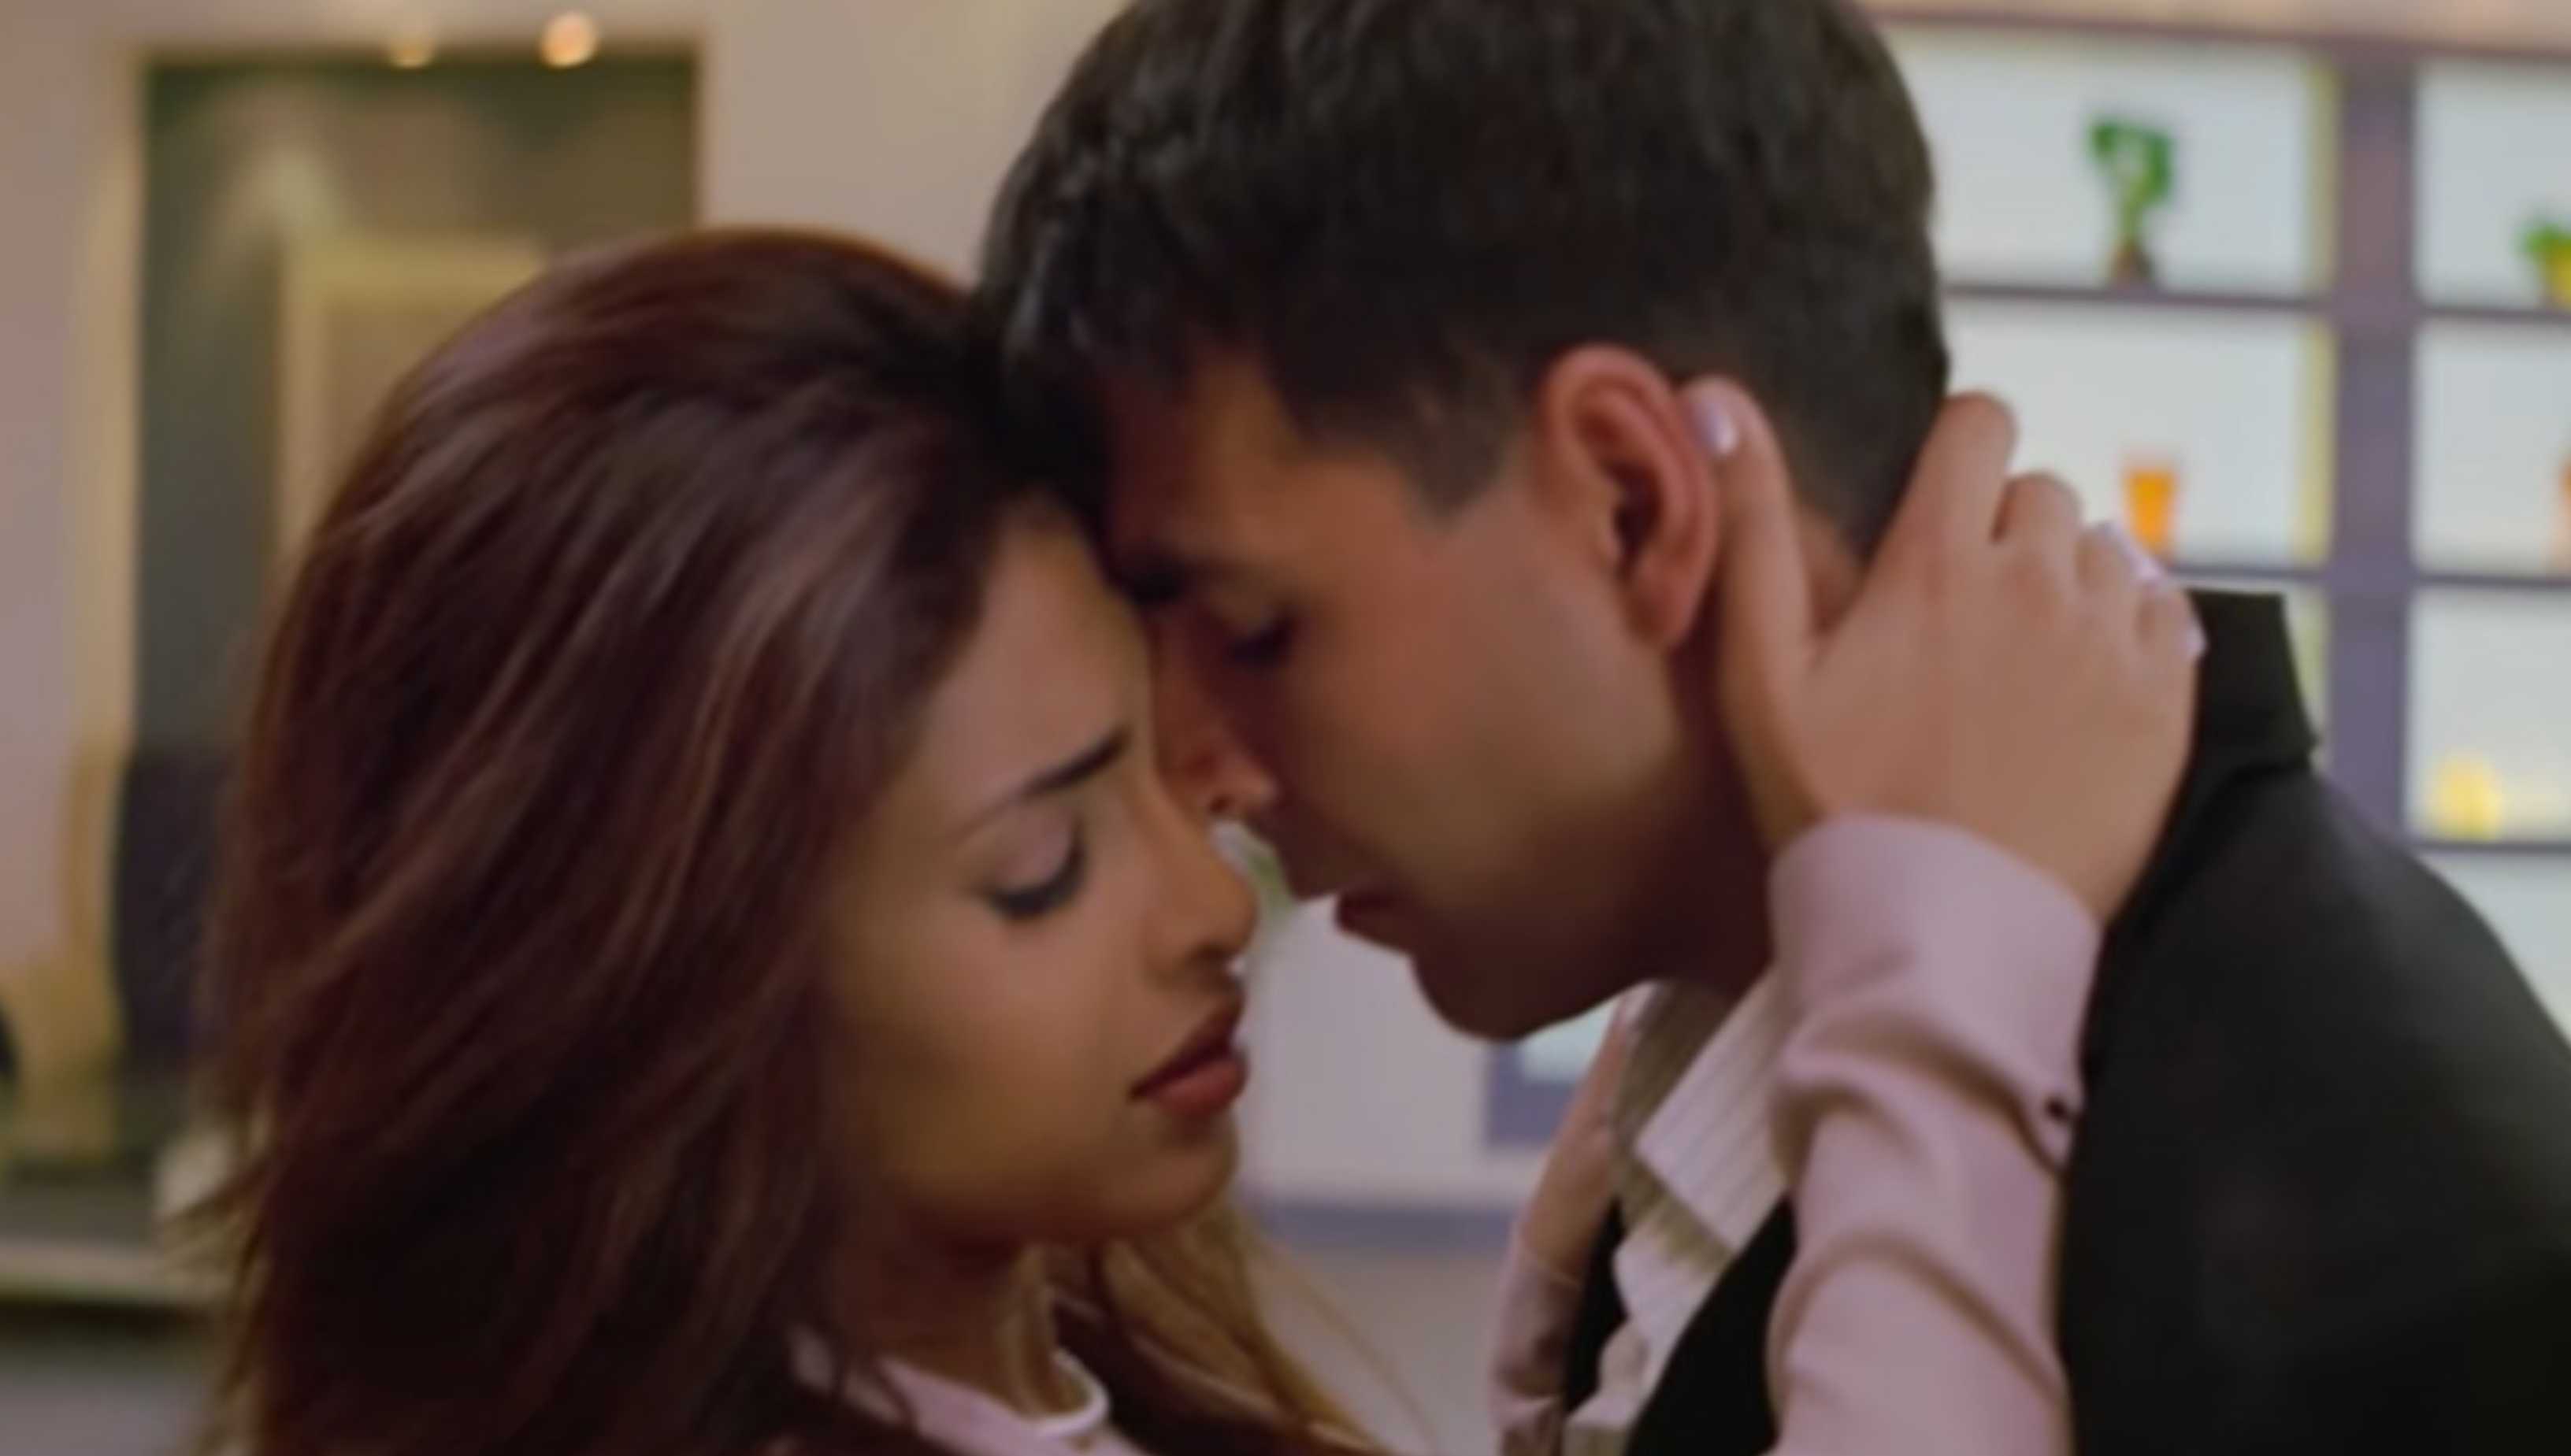 Priyanka Chopra and Akshay Kumar shot THIS passionate sequence in just one take